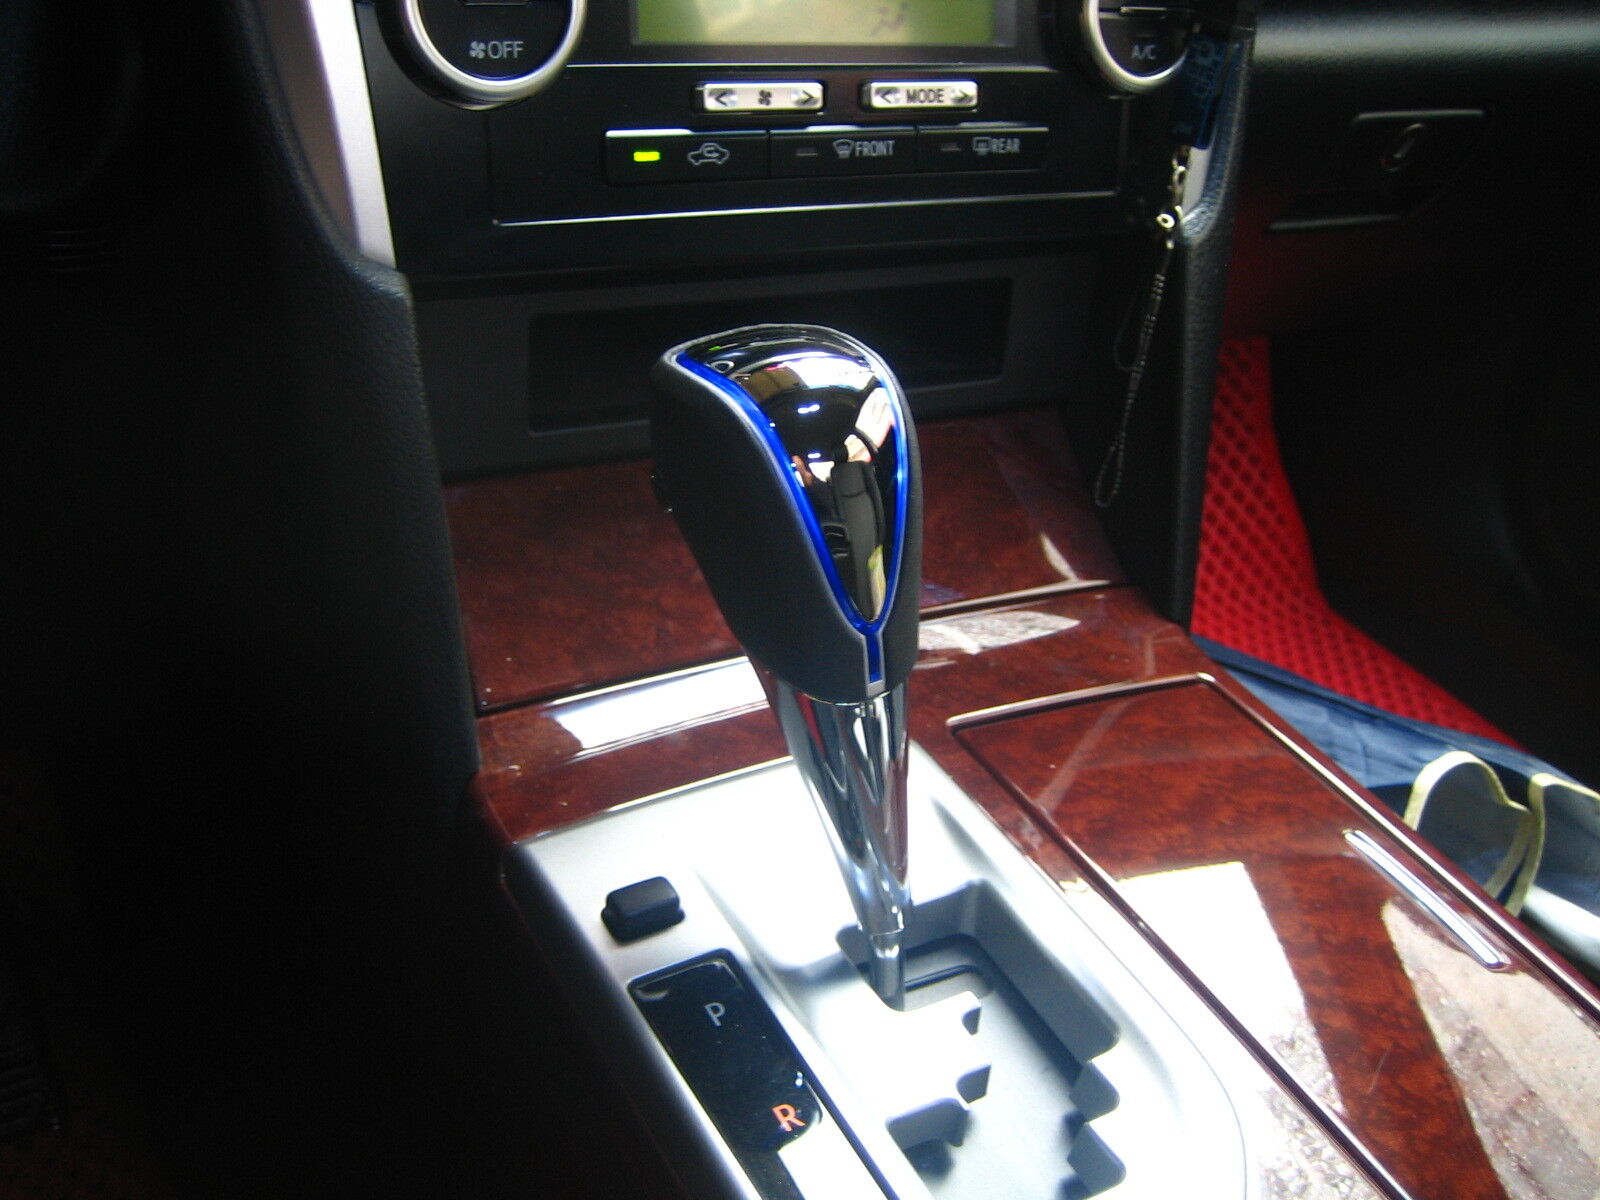 Toyota Aurion Camry 2012 LED gear shift knob Automatic black chrome